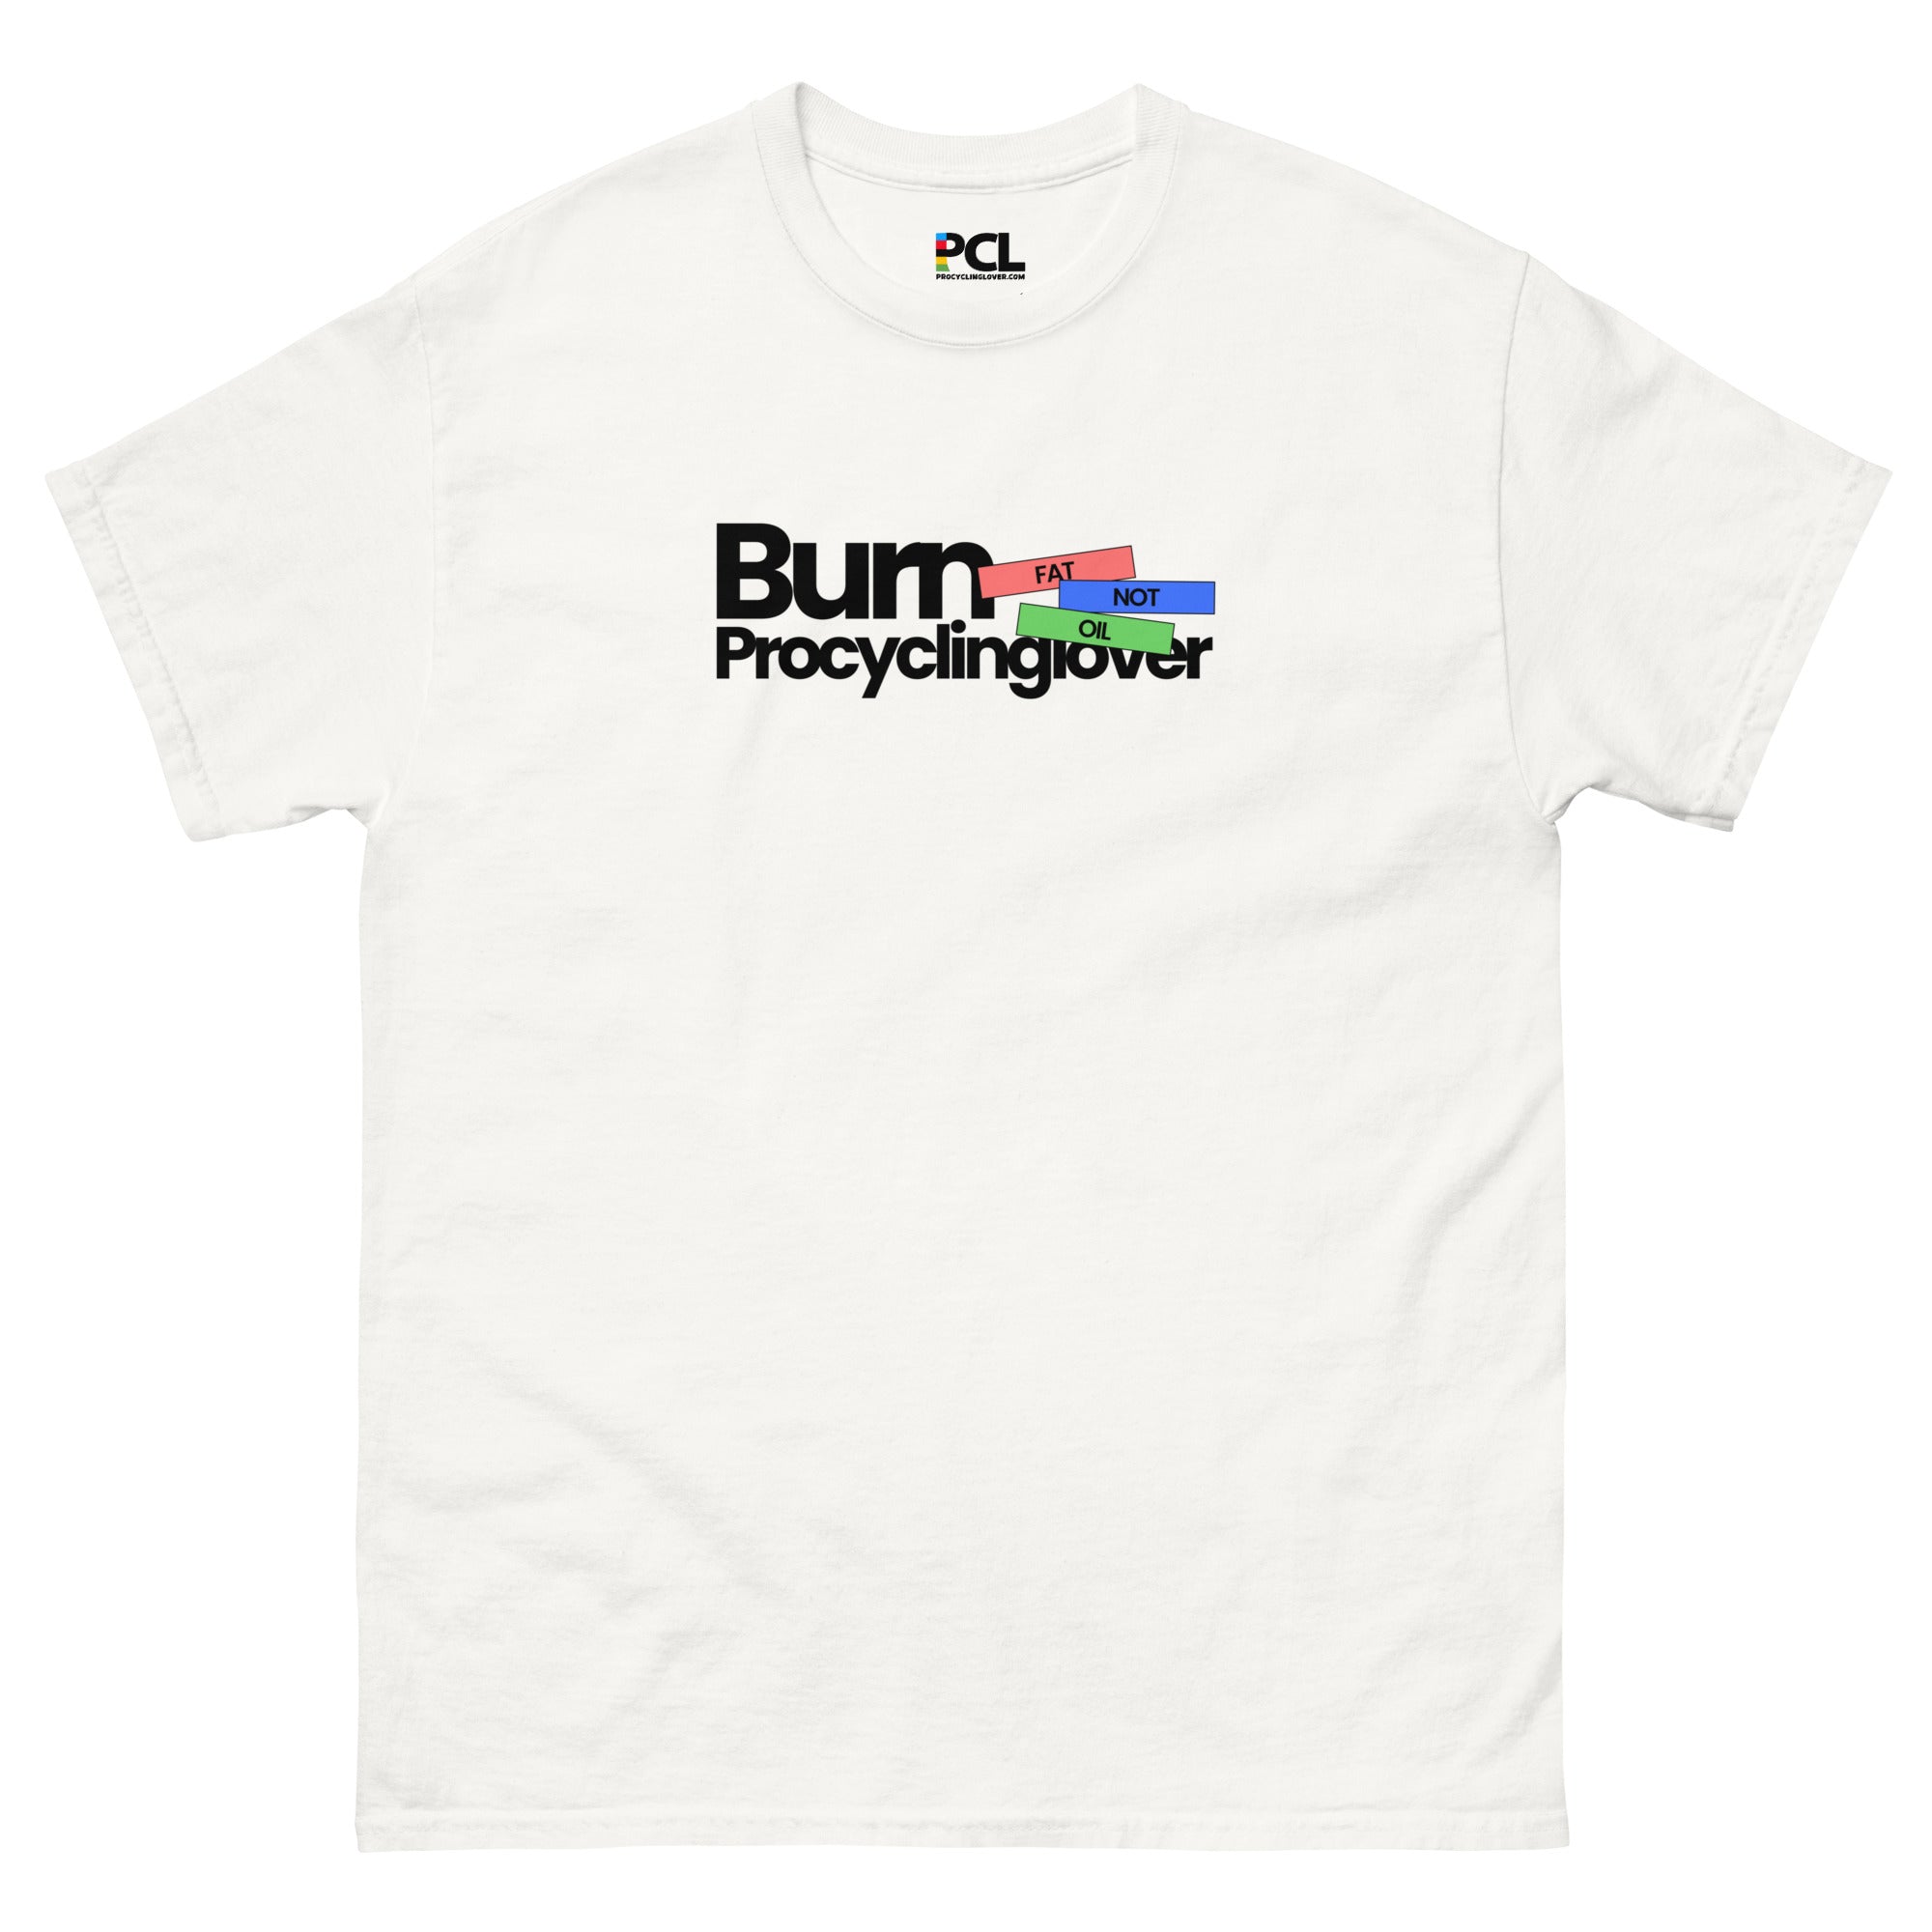 Burn Fat Not Oil Unisex T-Shirt